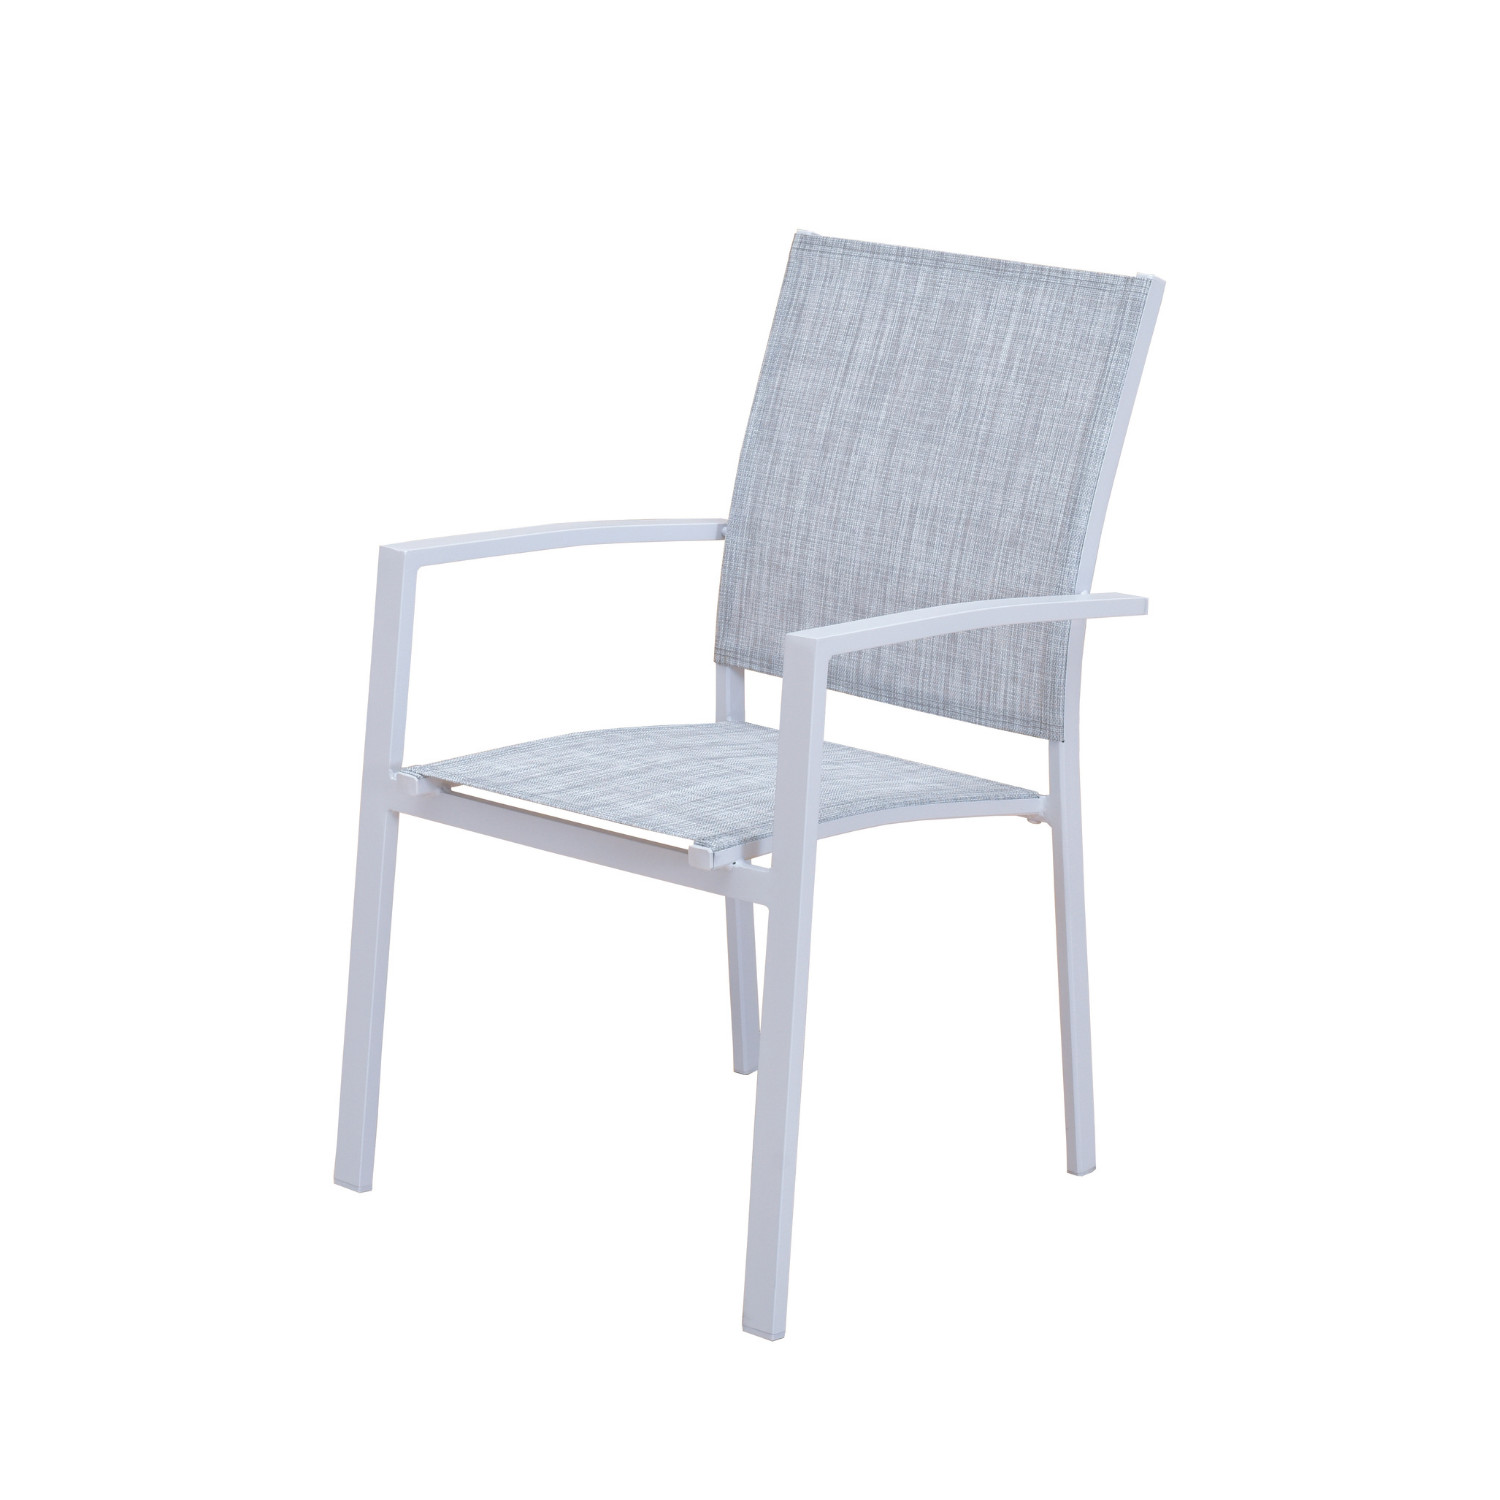 Table de jardin extensible aluminium blanc 180/240cm + 8 fauteuils